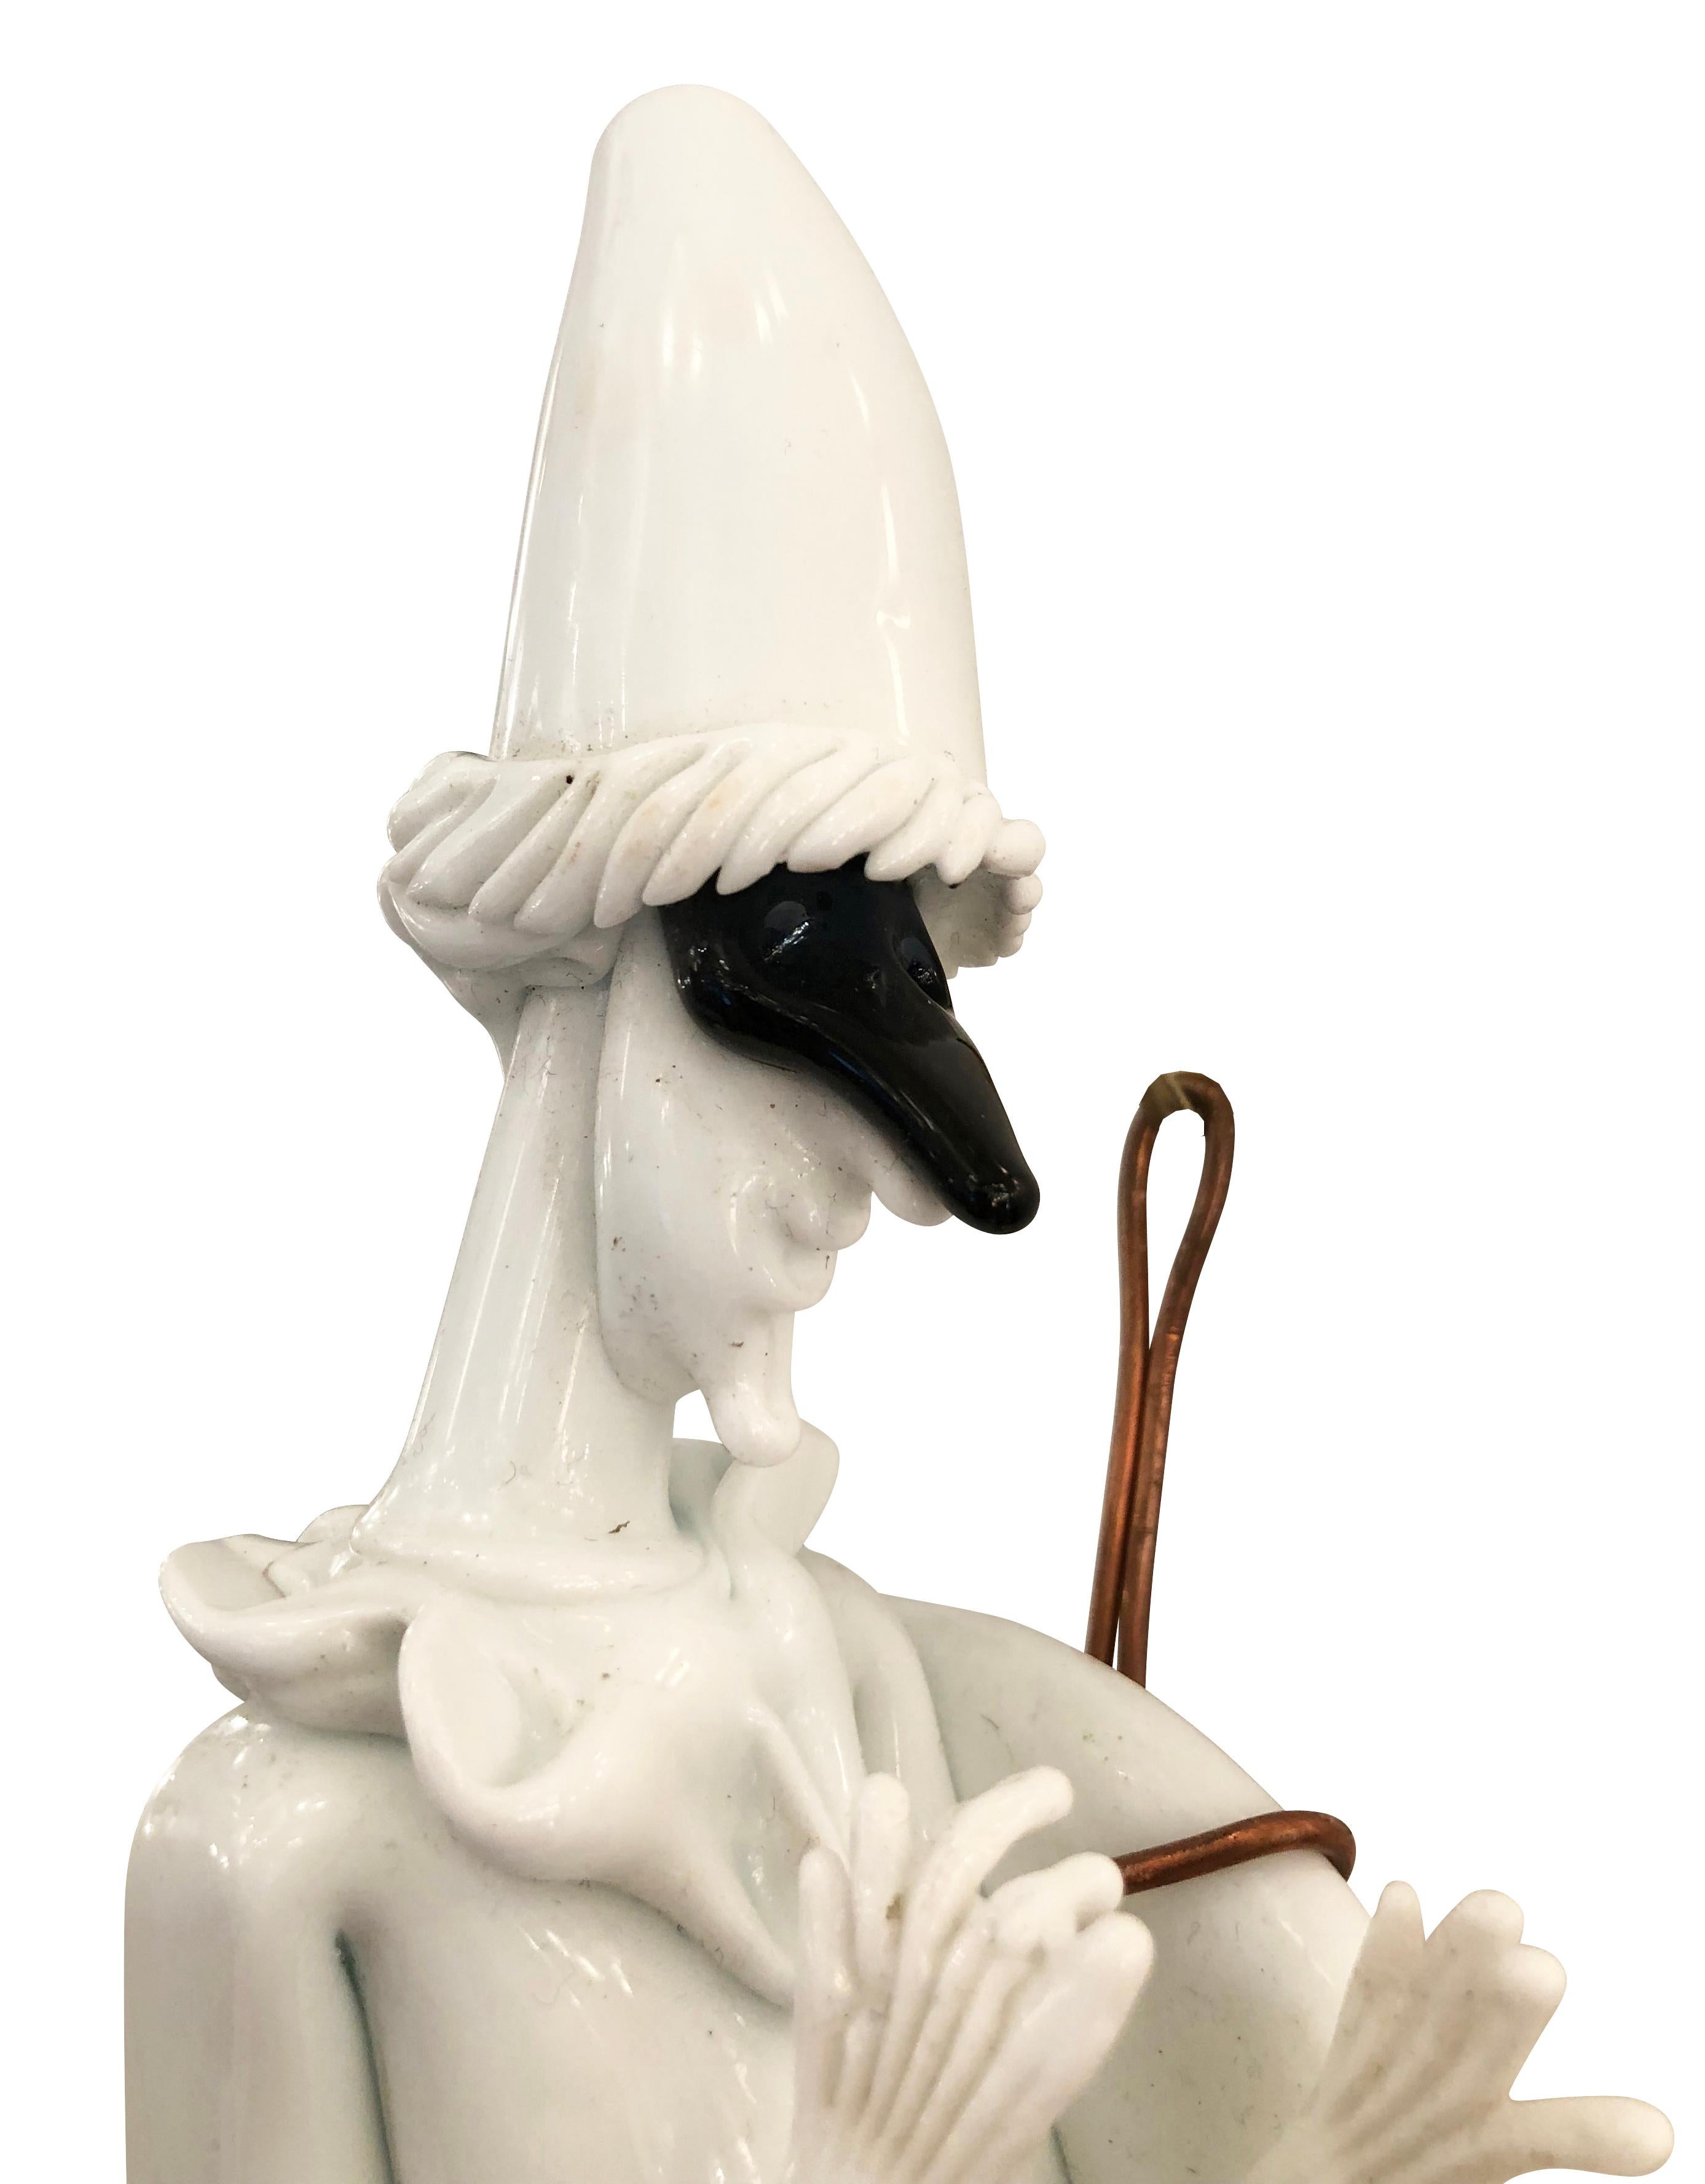 “Commedia Dell’Arte “ Murano glass figurine designed by Fulvio Bianconi for Venini in the 1960s. Originally meant to lay flat, comes with a custom wall bracket. Original Venini label on the back.

Condition: Good vintage condition, minor wear